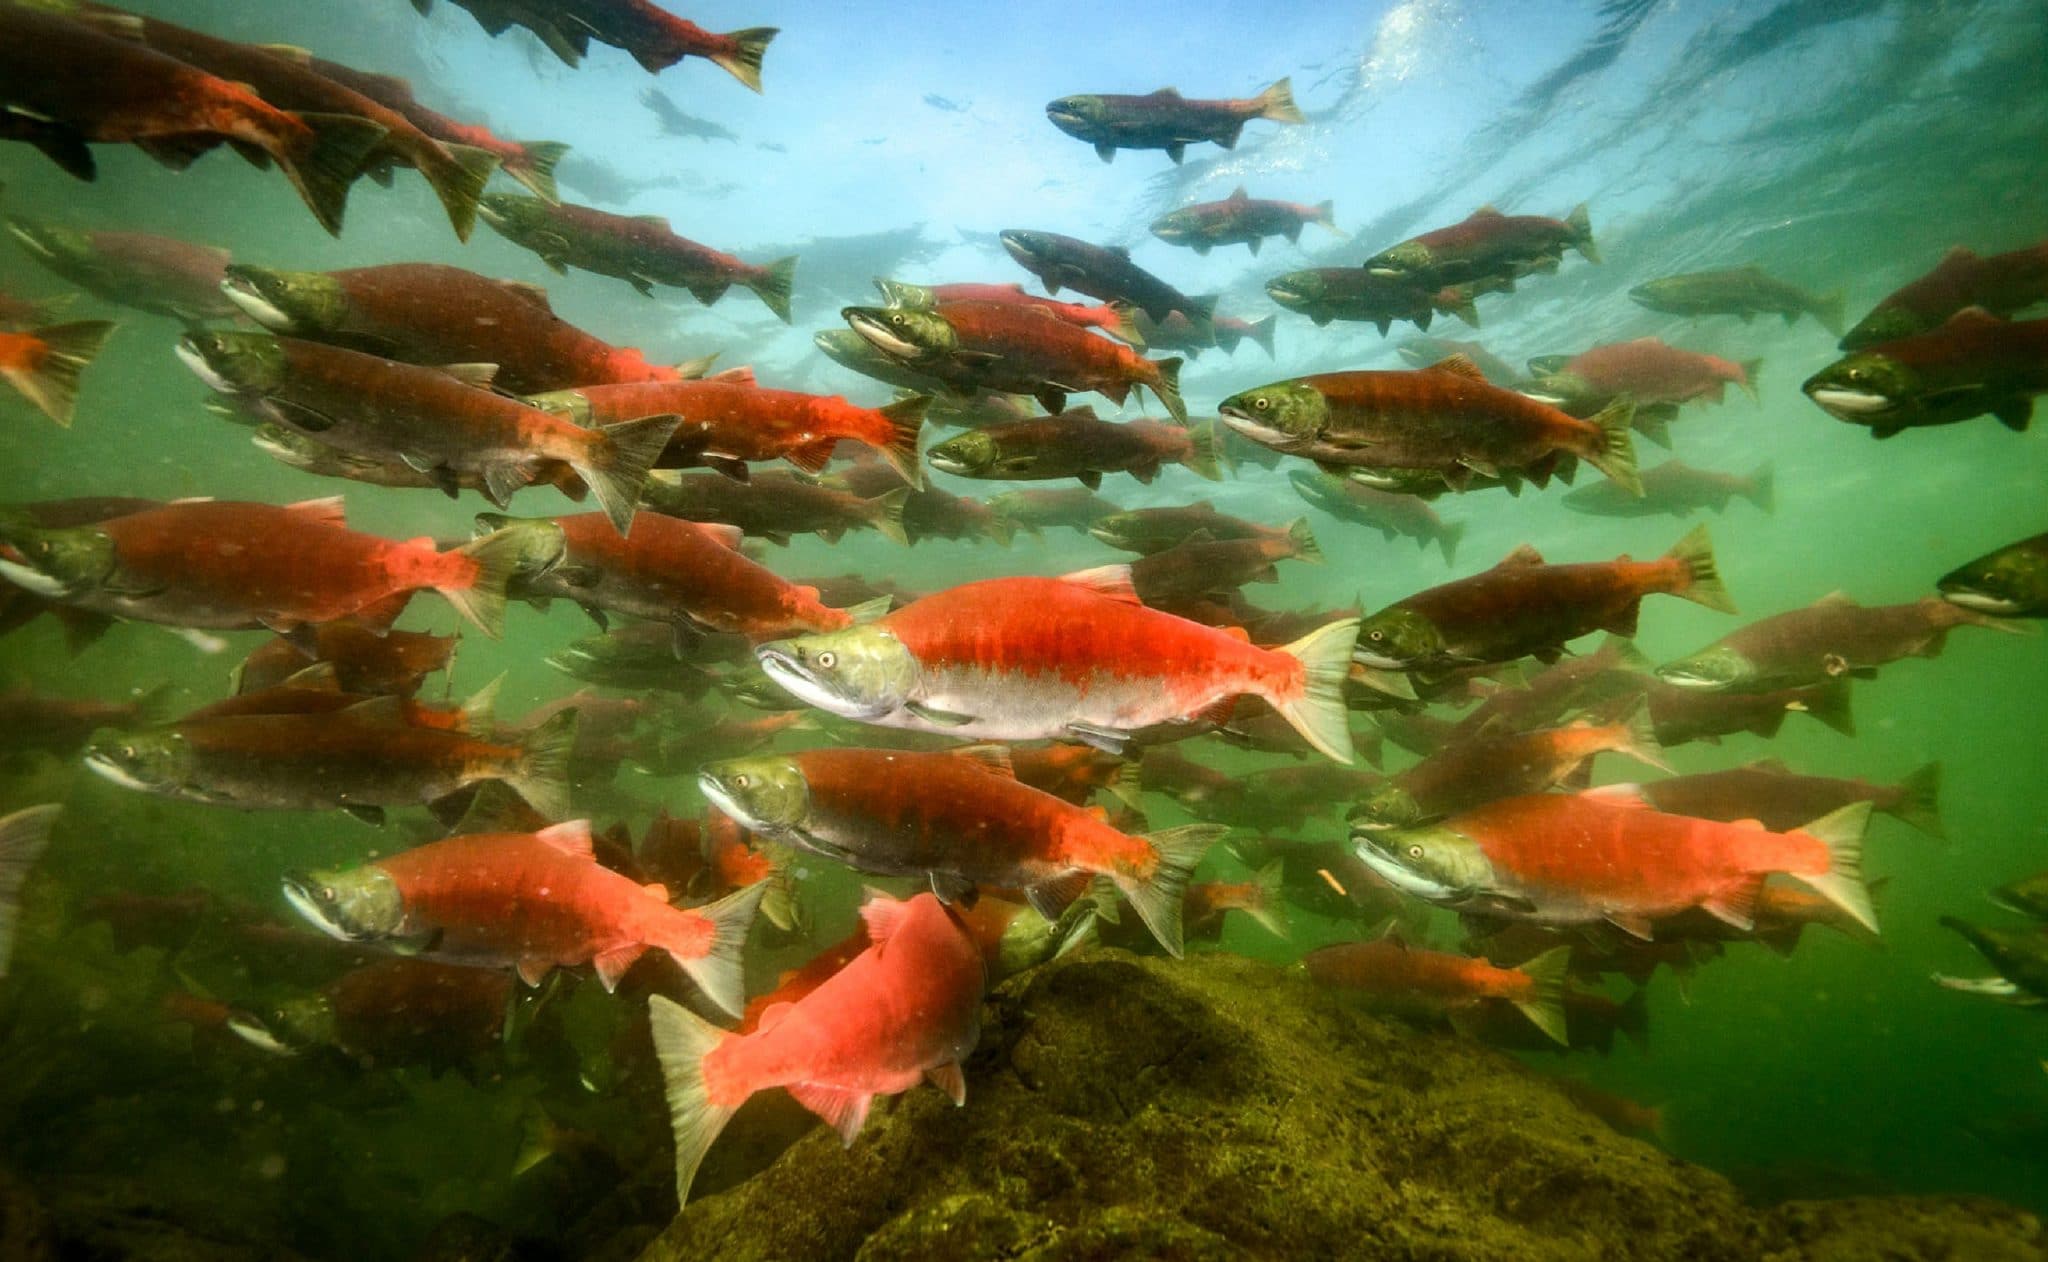 Salmon: A Keystone Species - Pacific Wild